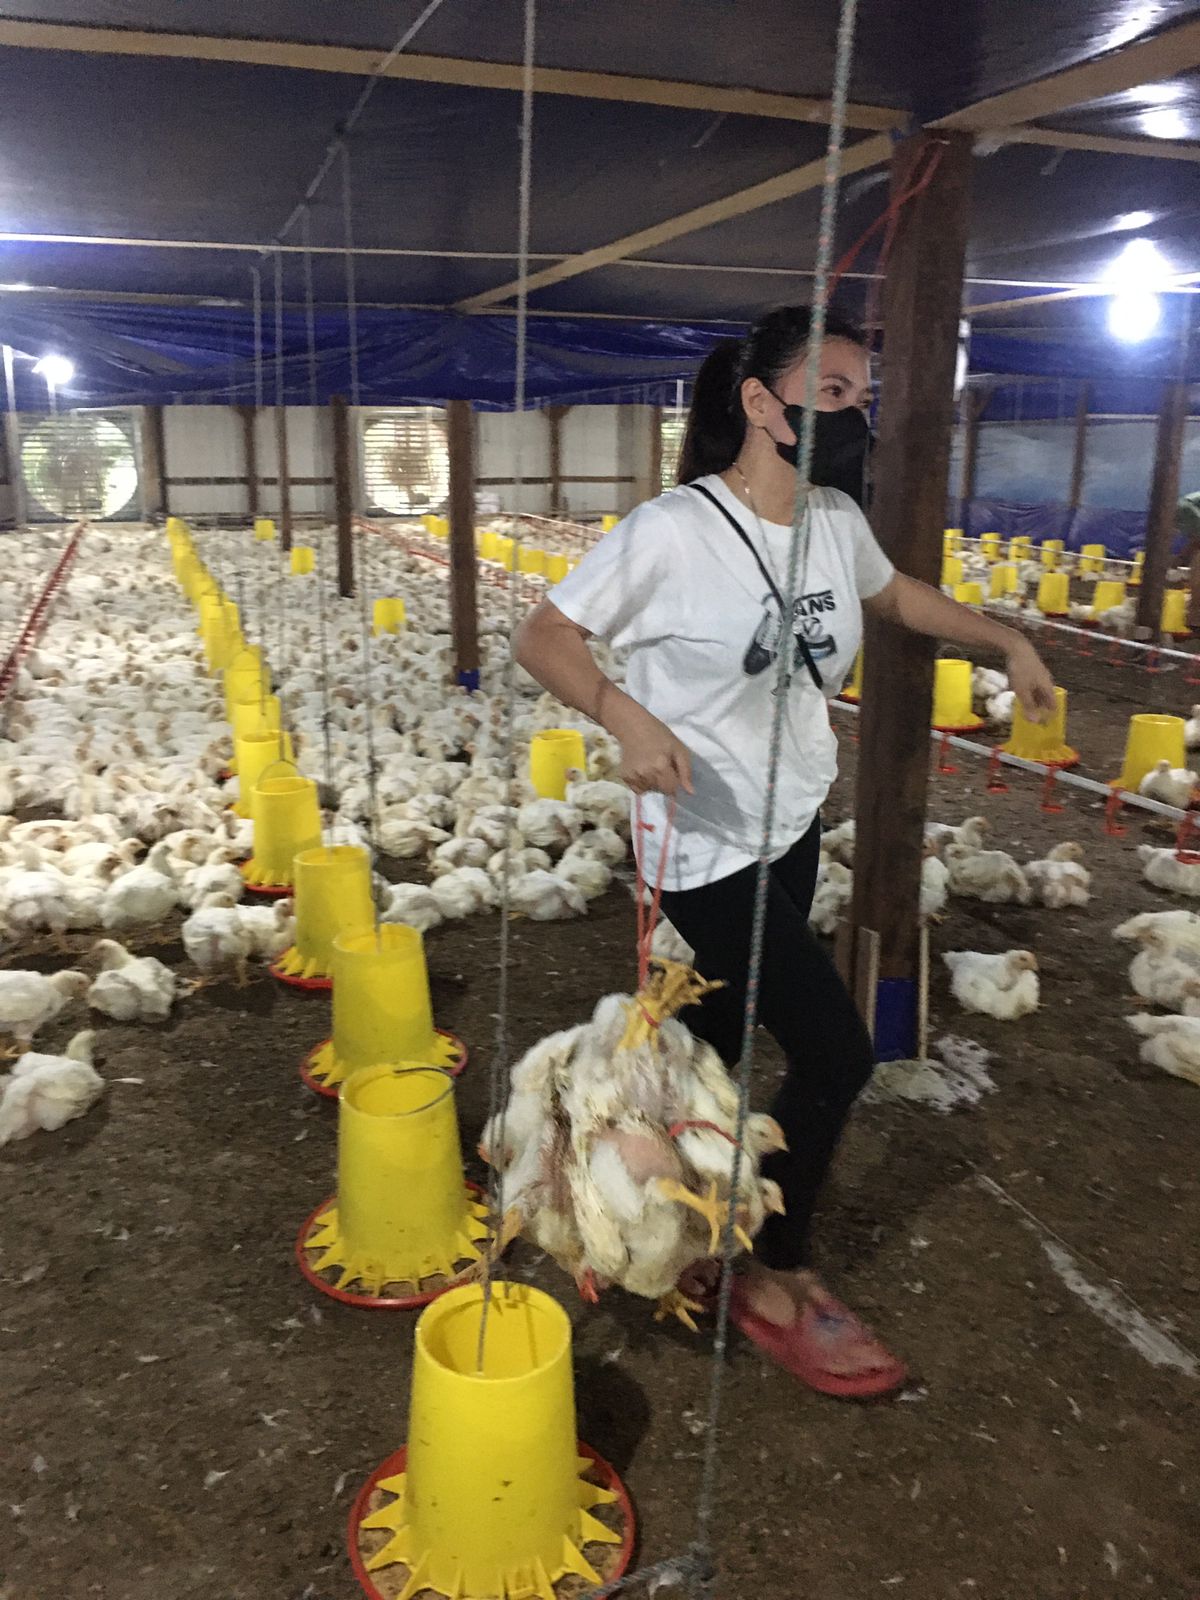 Kegiatan Magang Mahasiswa Fapet di Lokasi Peternakan Ayam PT. Charoen Pokhphand